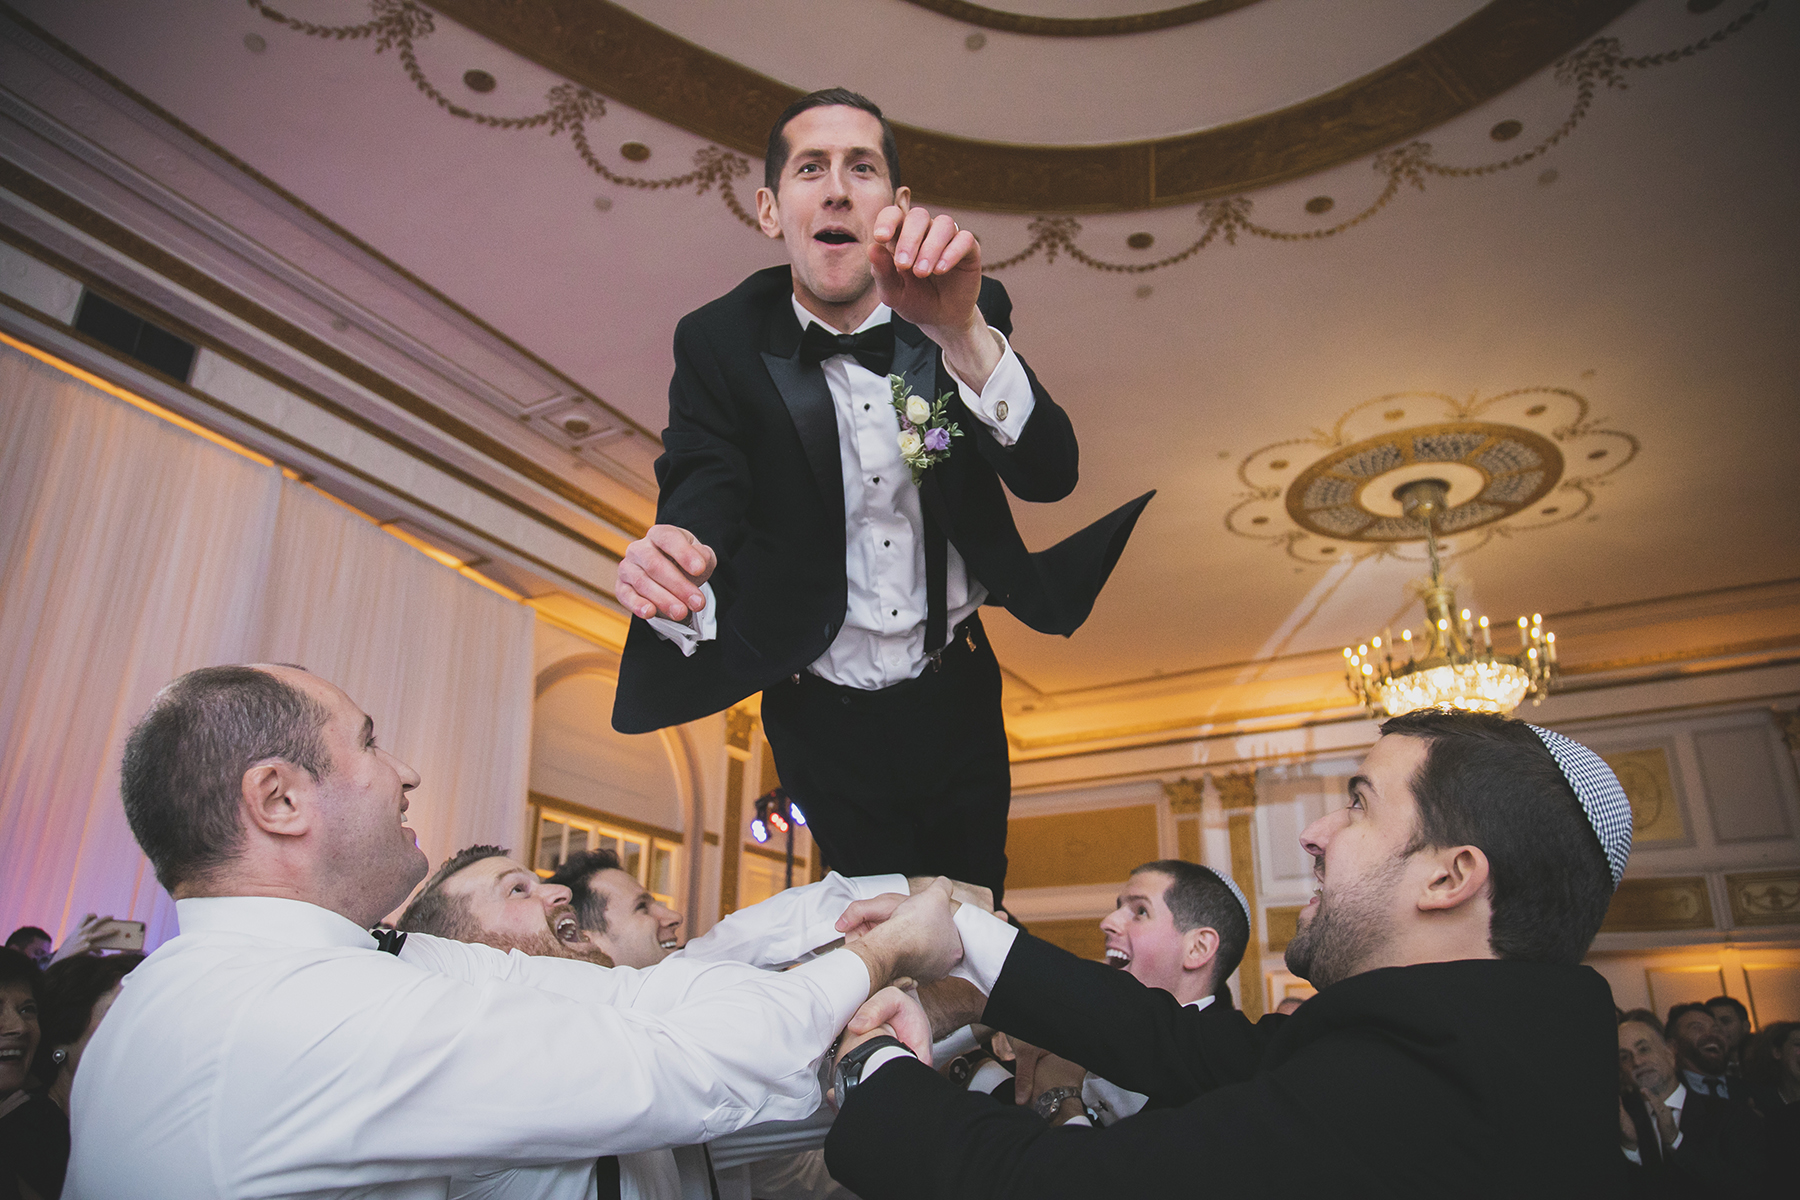 Studio Baron Photo Montreal wedding photographer with groom at a Jewish wedding hora at the Windsor Ballrooms